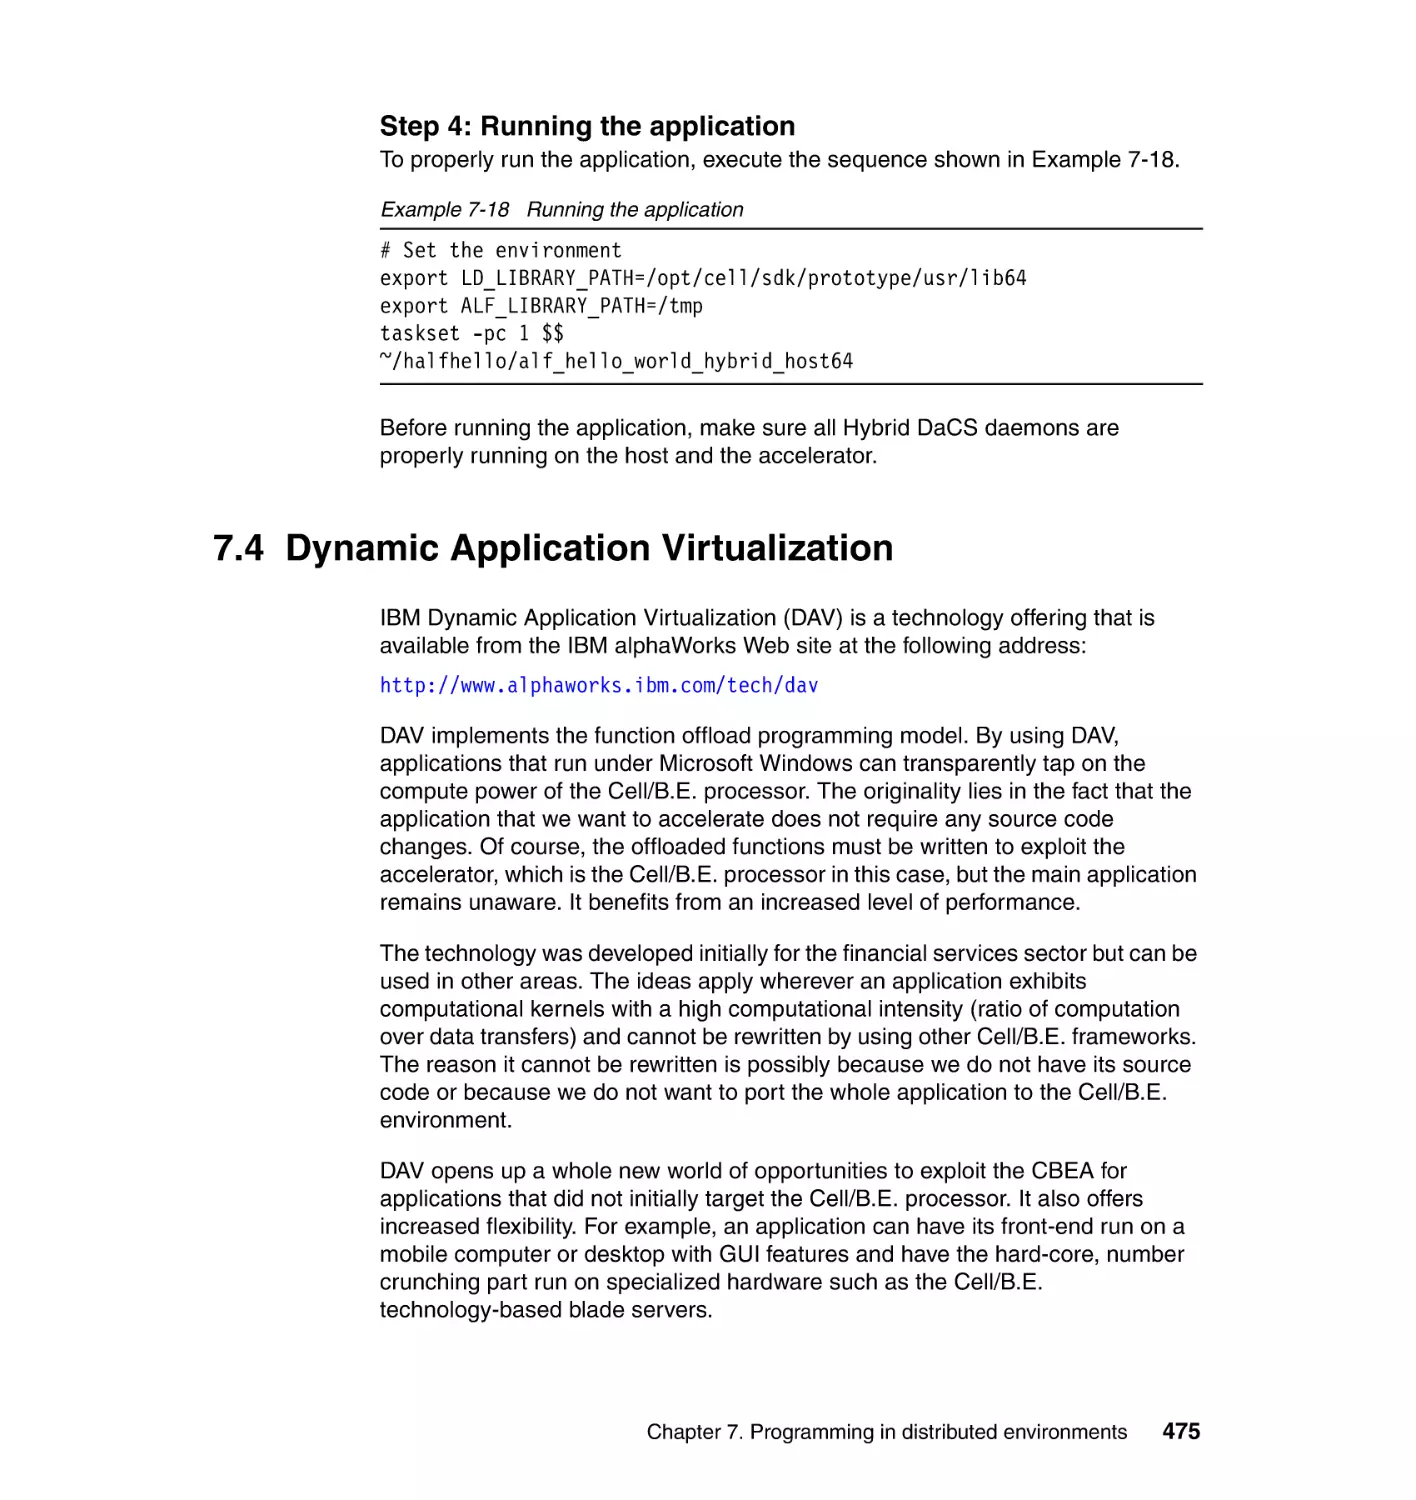 7.4 Dynamic Application Virtualization